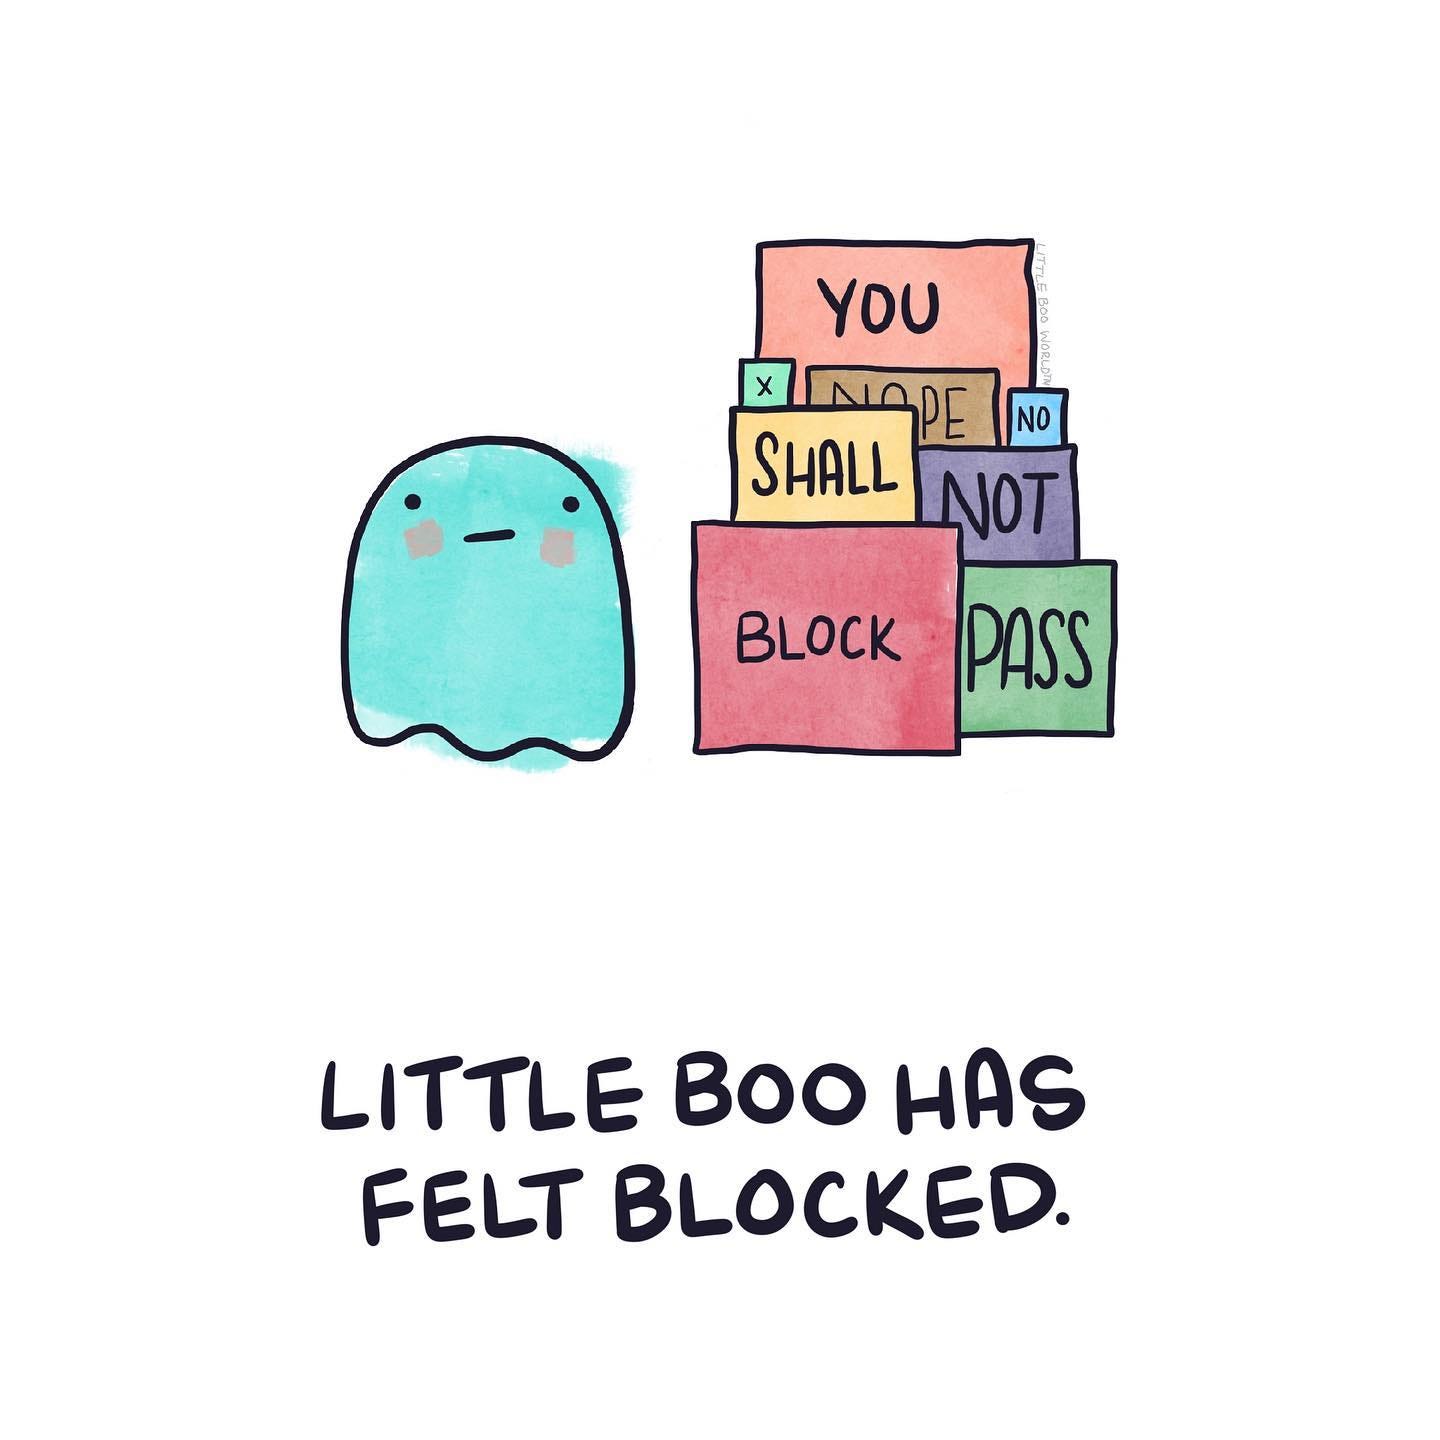 Little boo has felt blocked